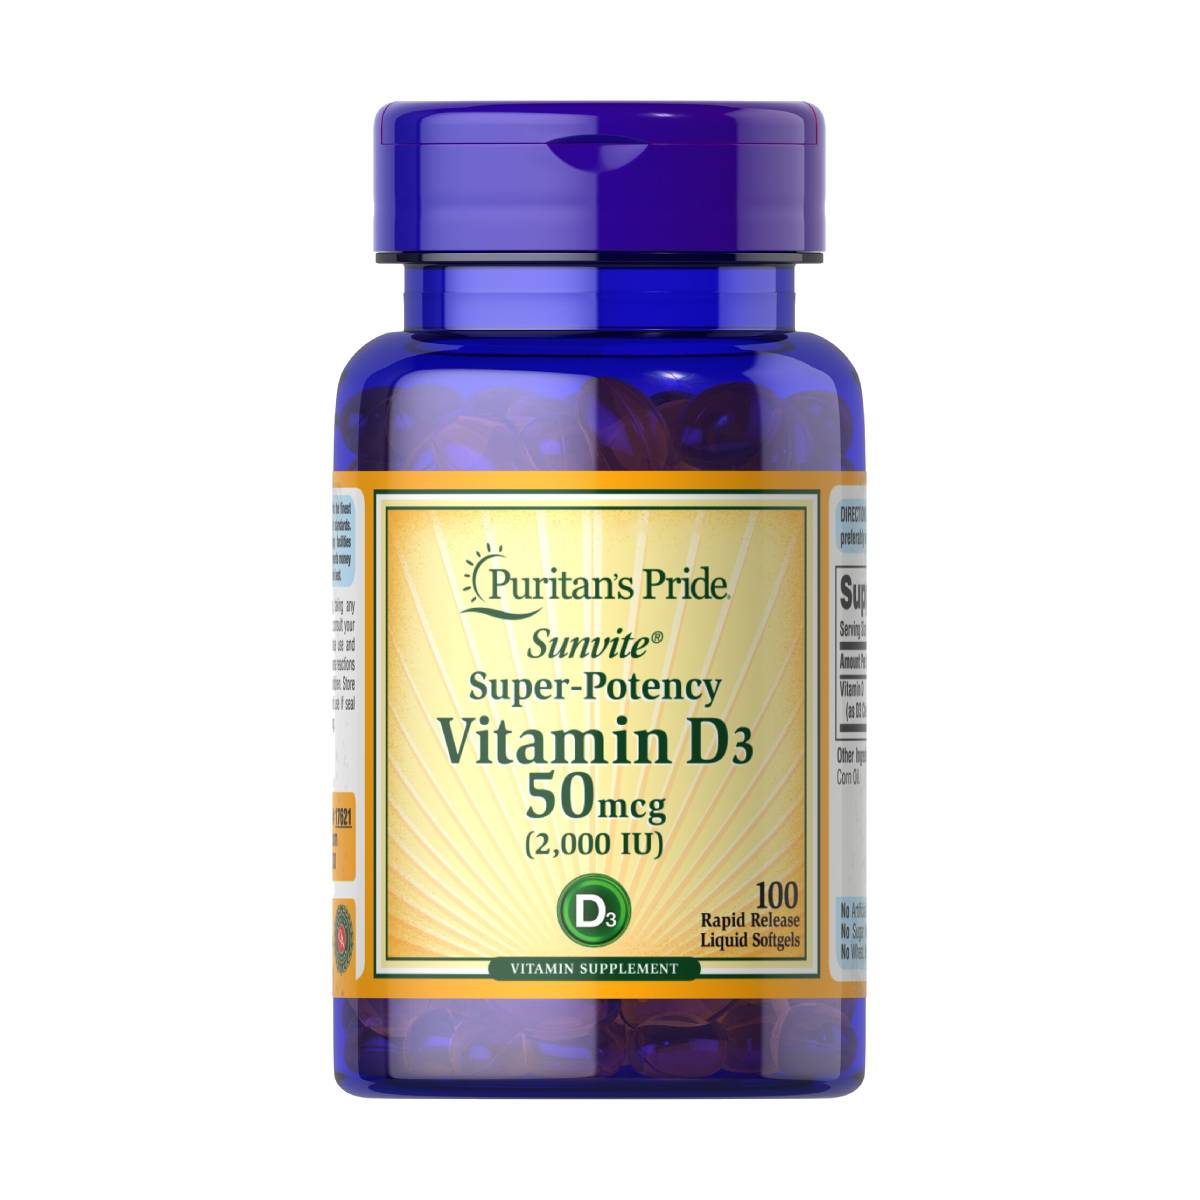 Puritan's Pride, Vitamin D3 50 mcg (2000 IU)